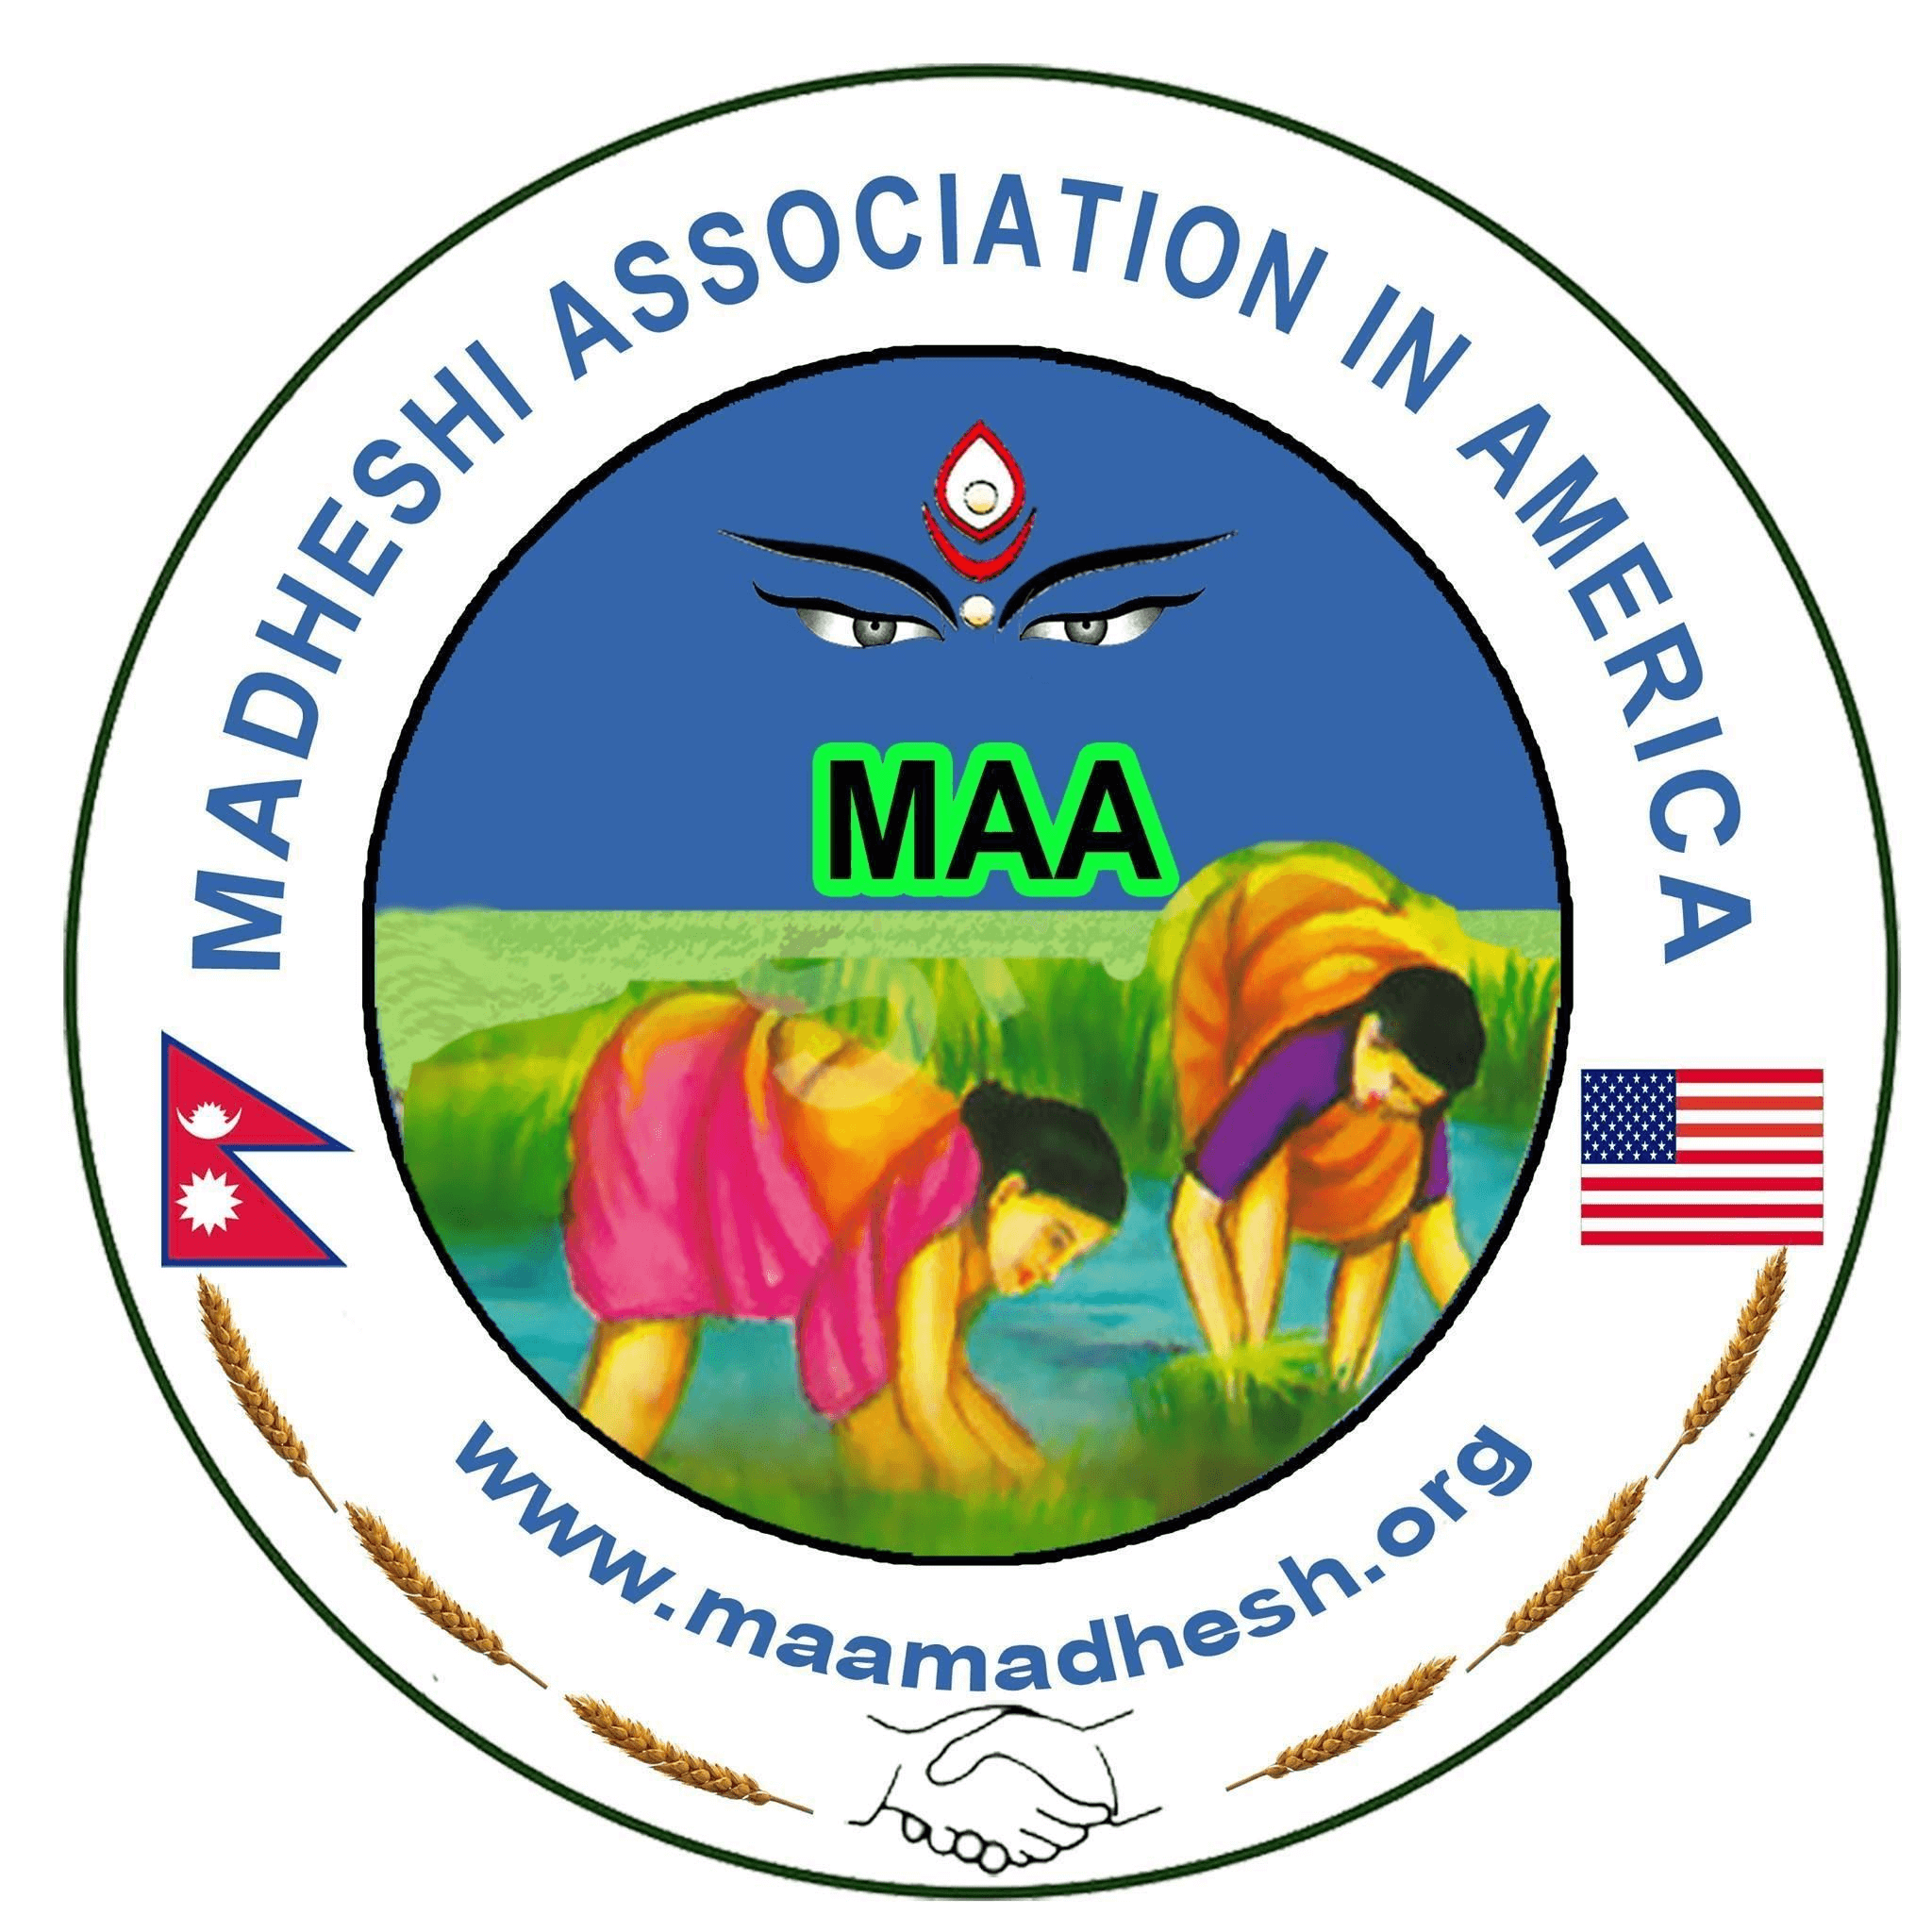 Madheshi Associations in America Florida Chapter